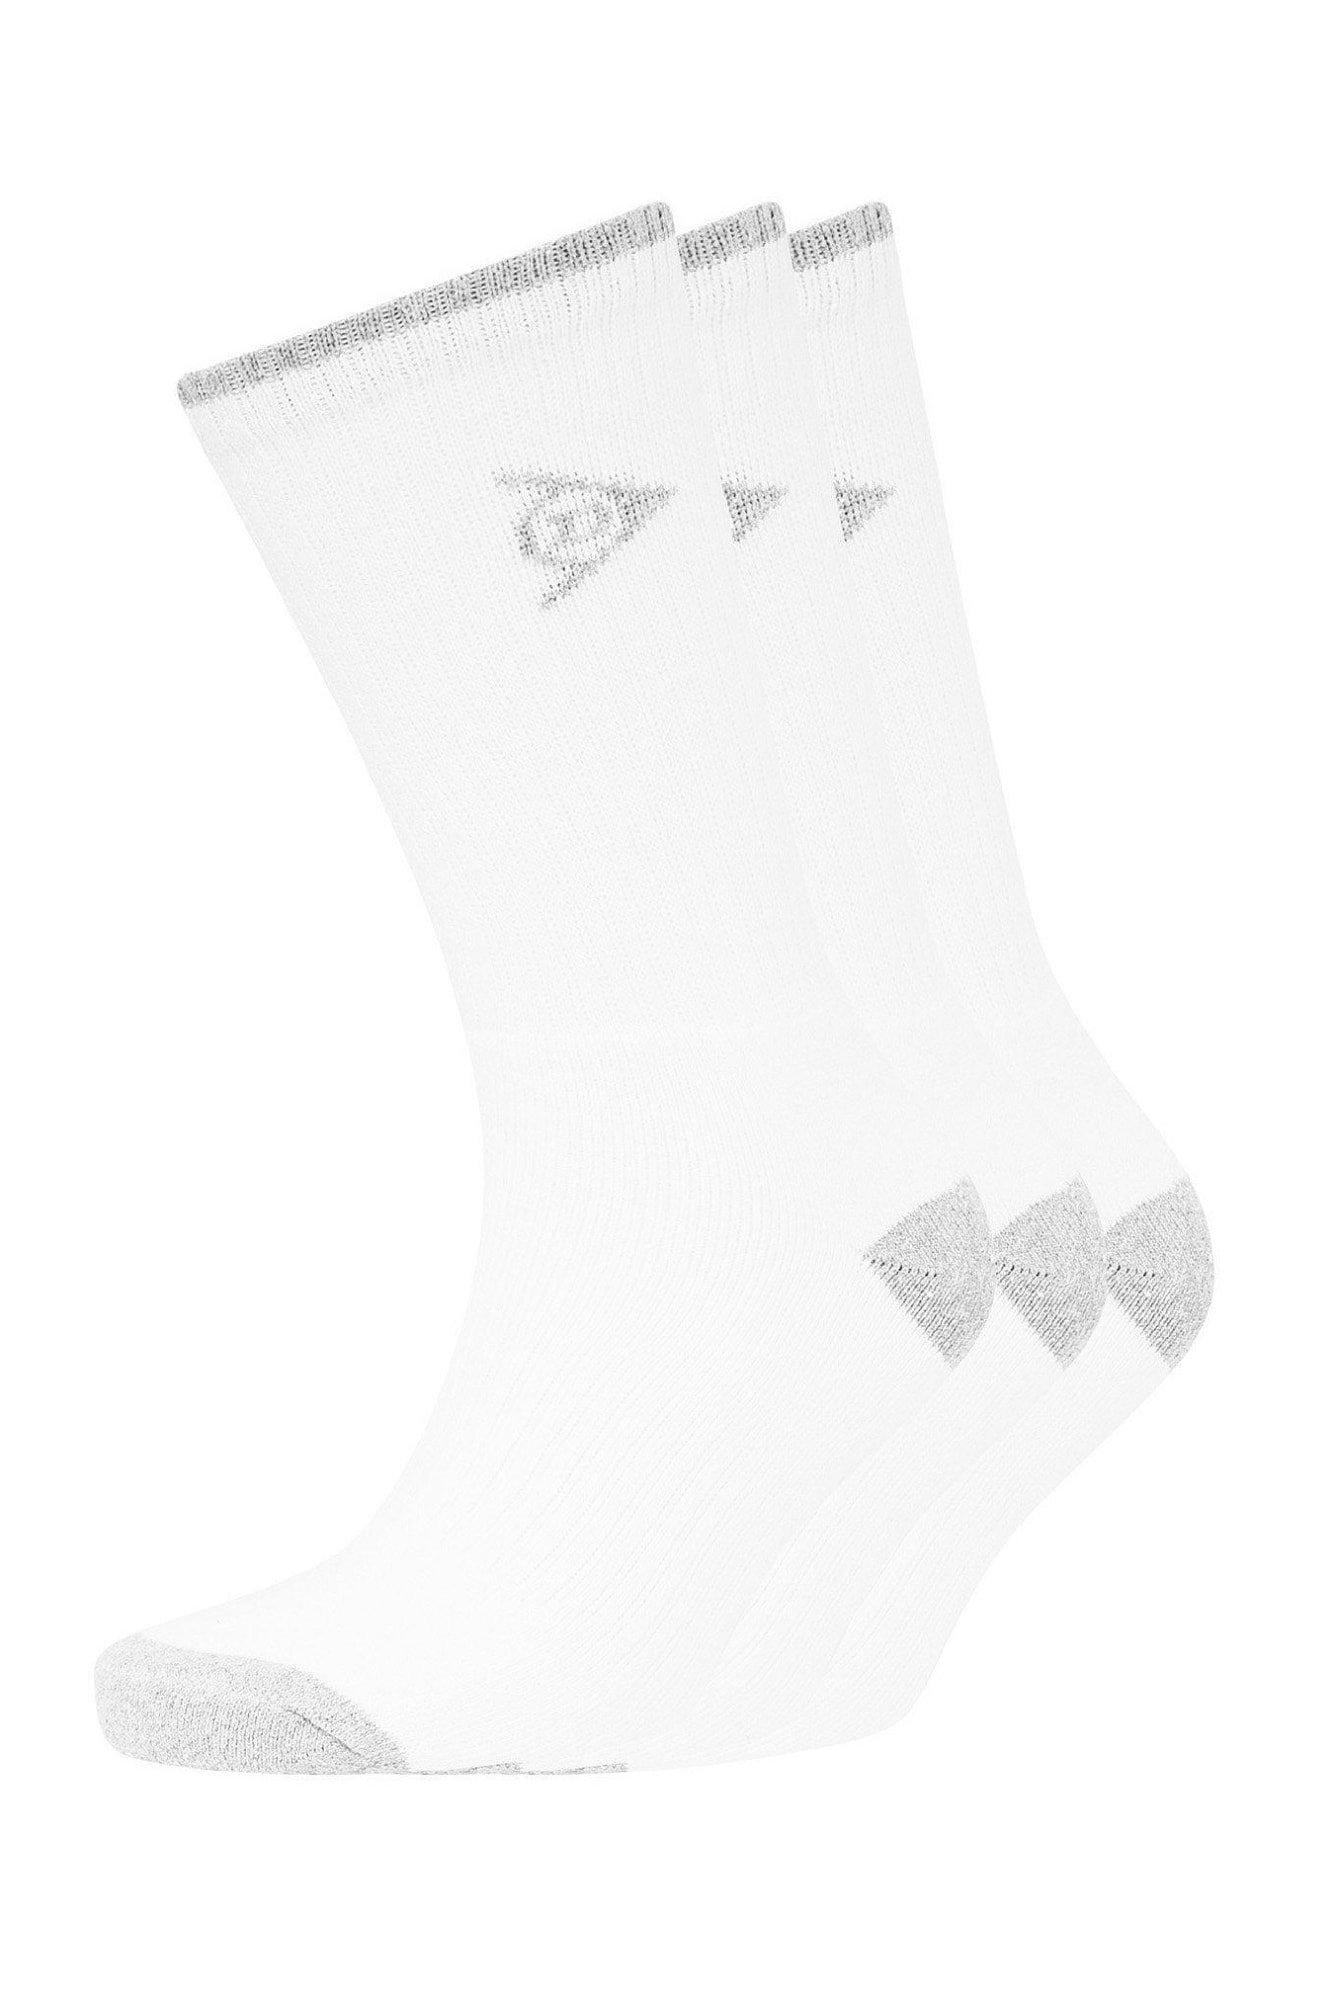 Killerton Sports Socks (Pack of 3)